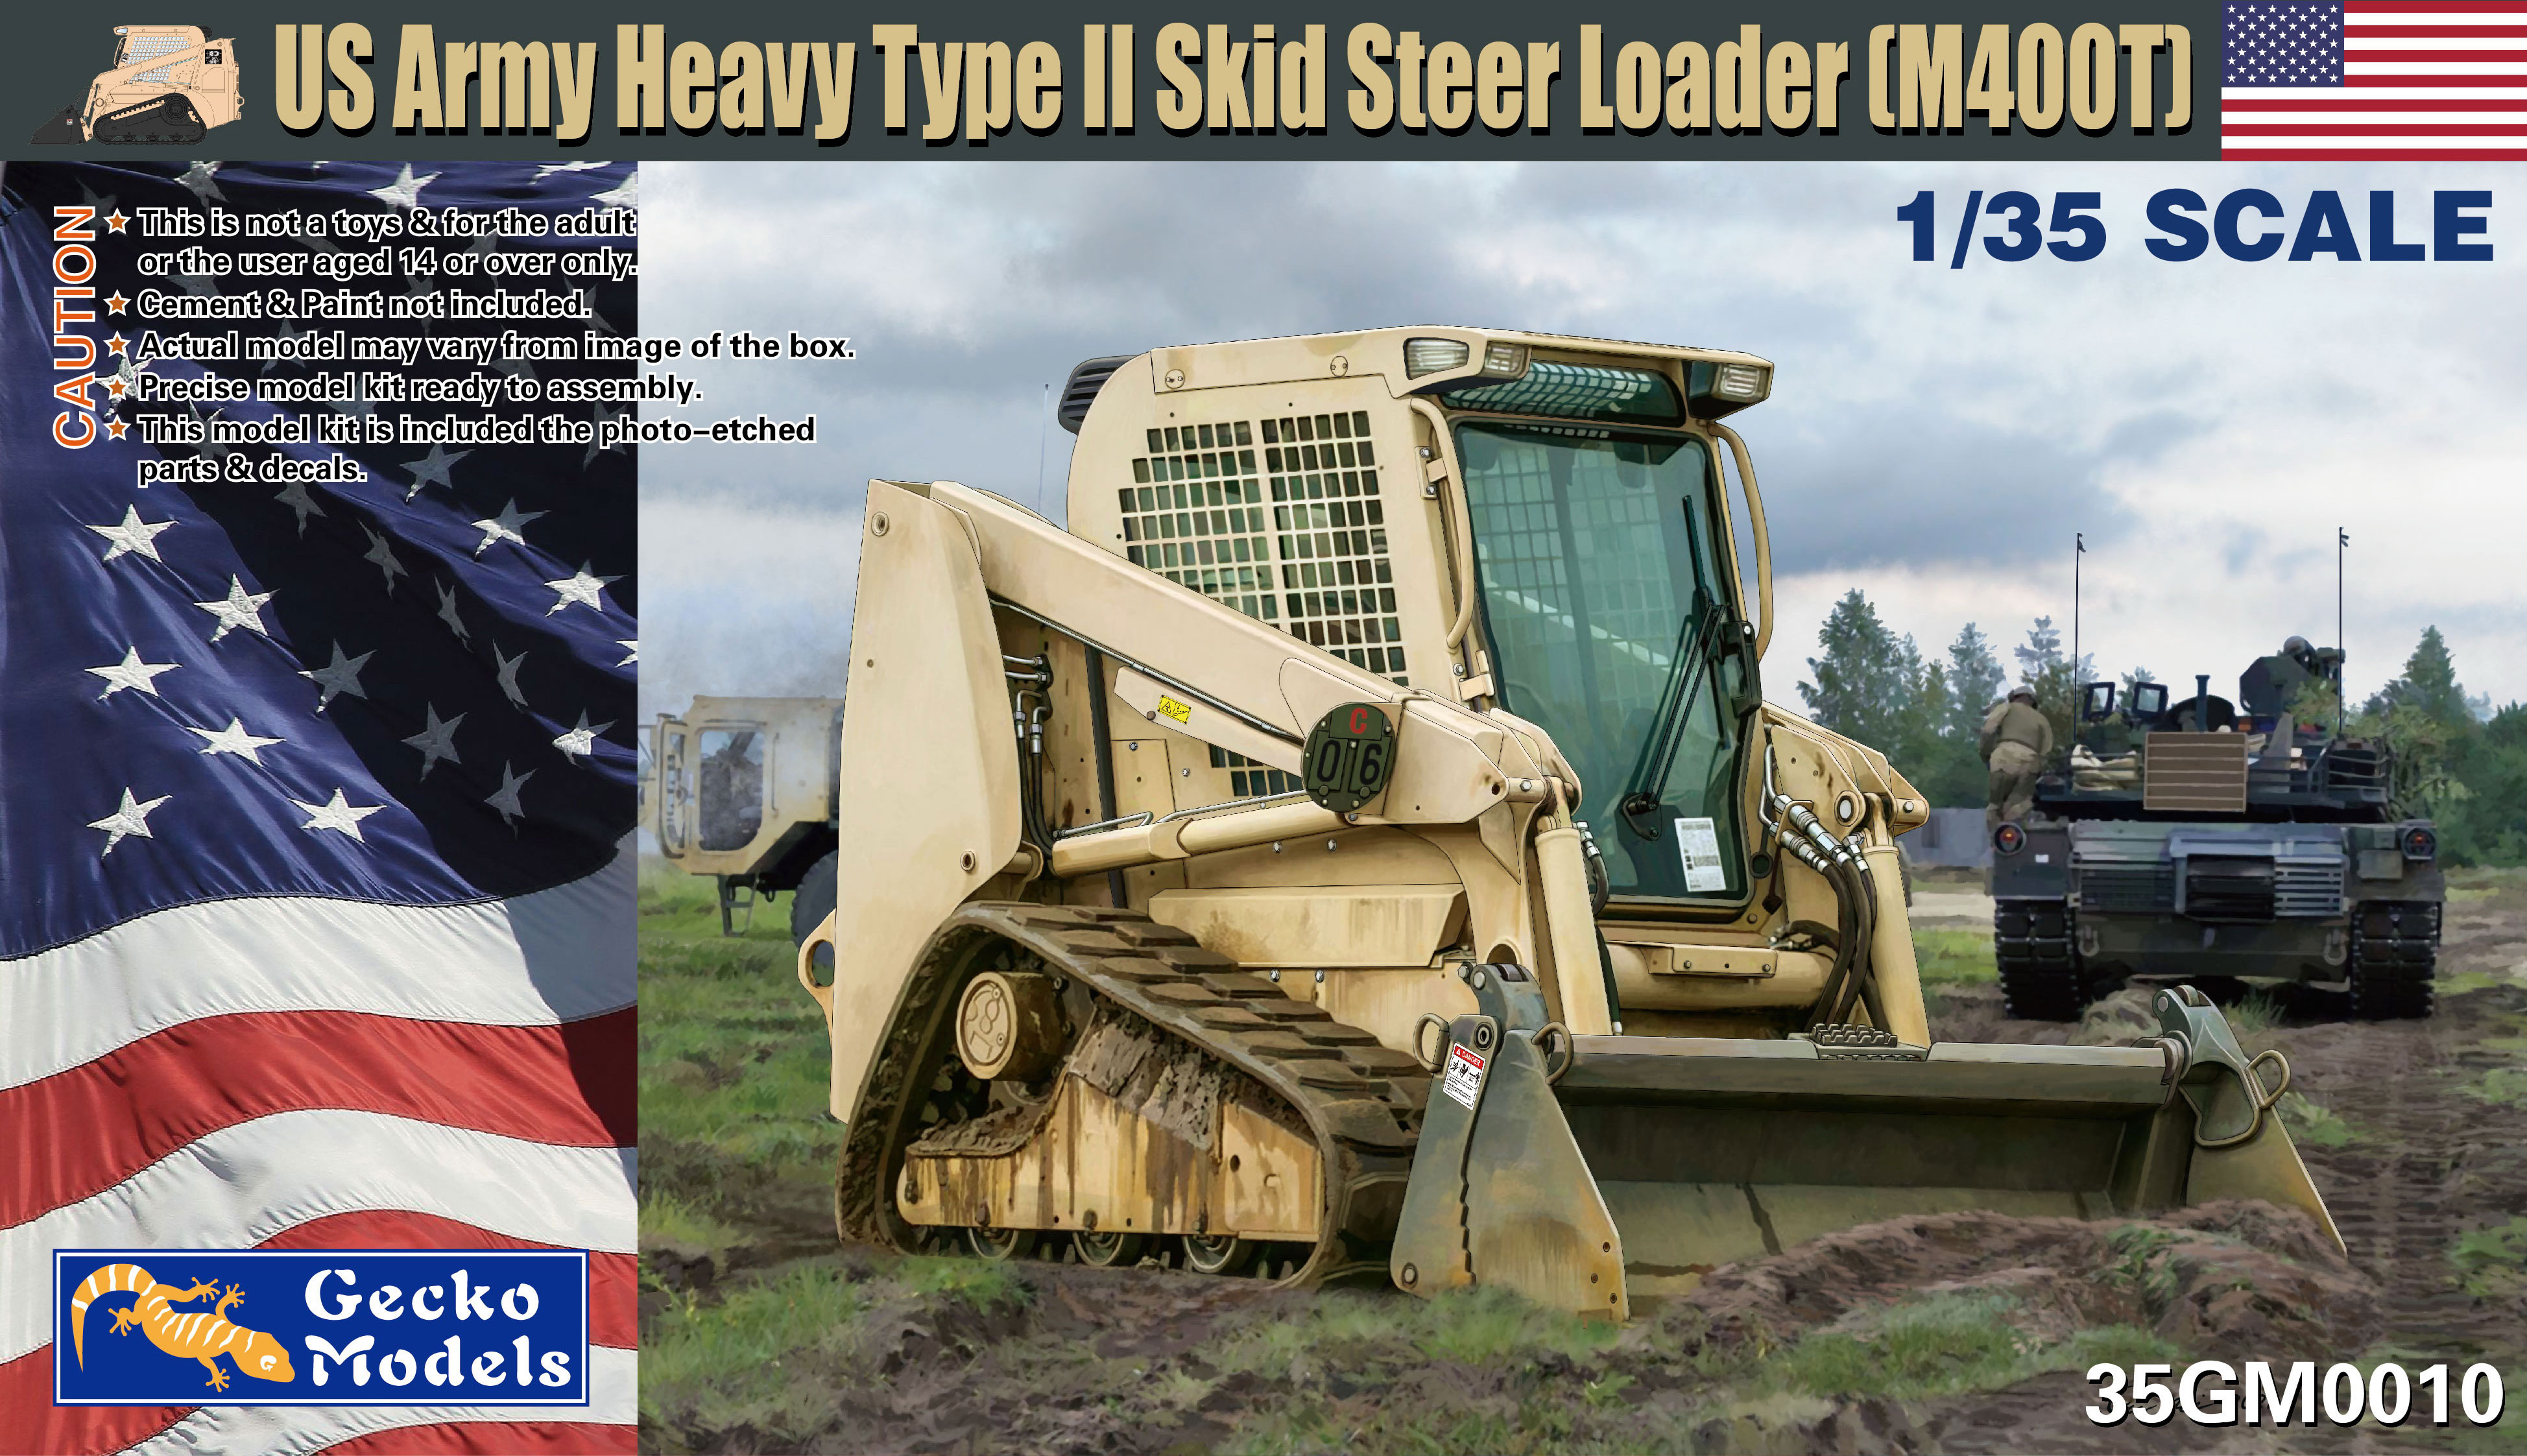 US Army Light Type II Skid Steer Loader Tracked (M400T)